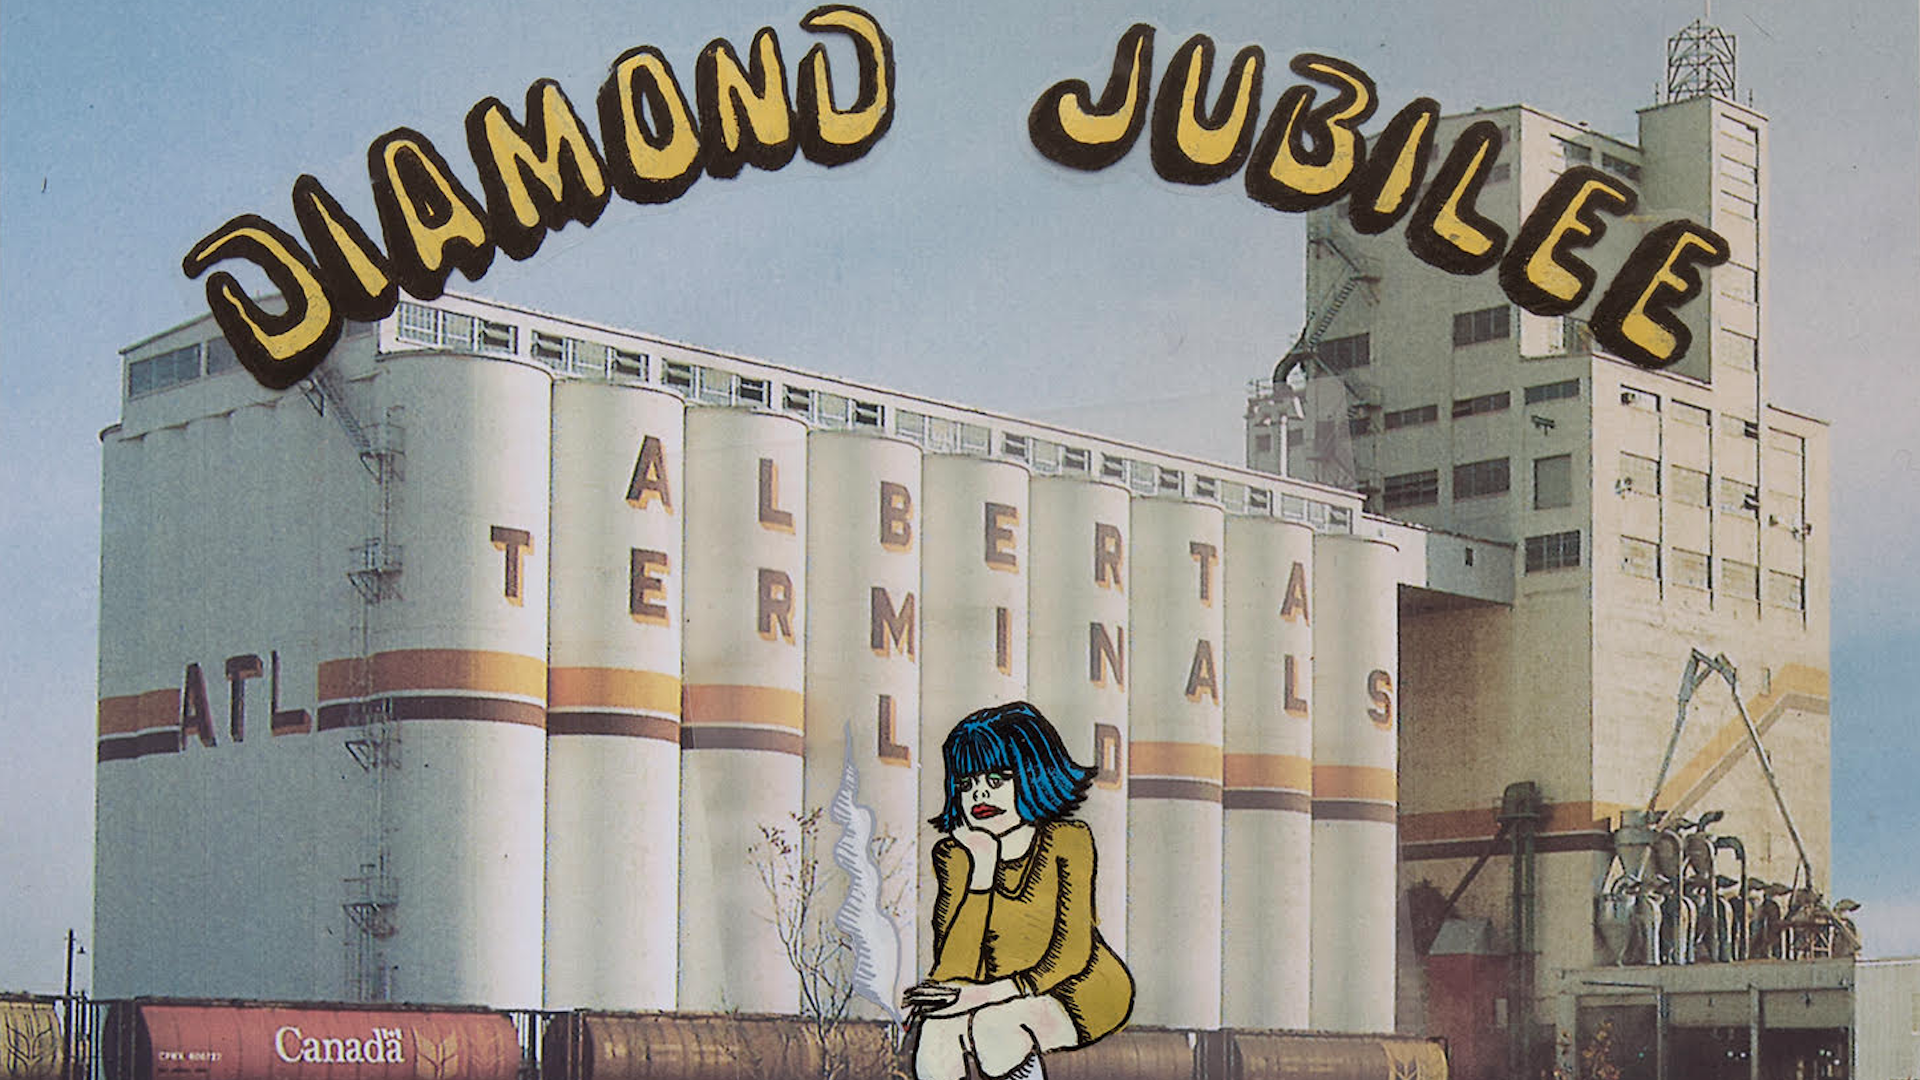 Diamond Jubilee's album cover